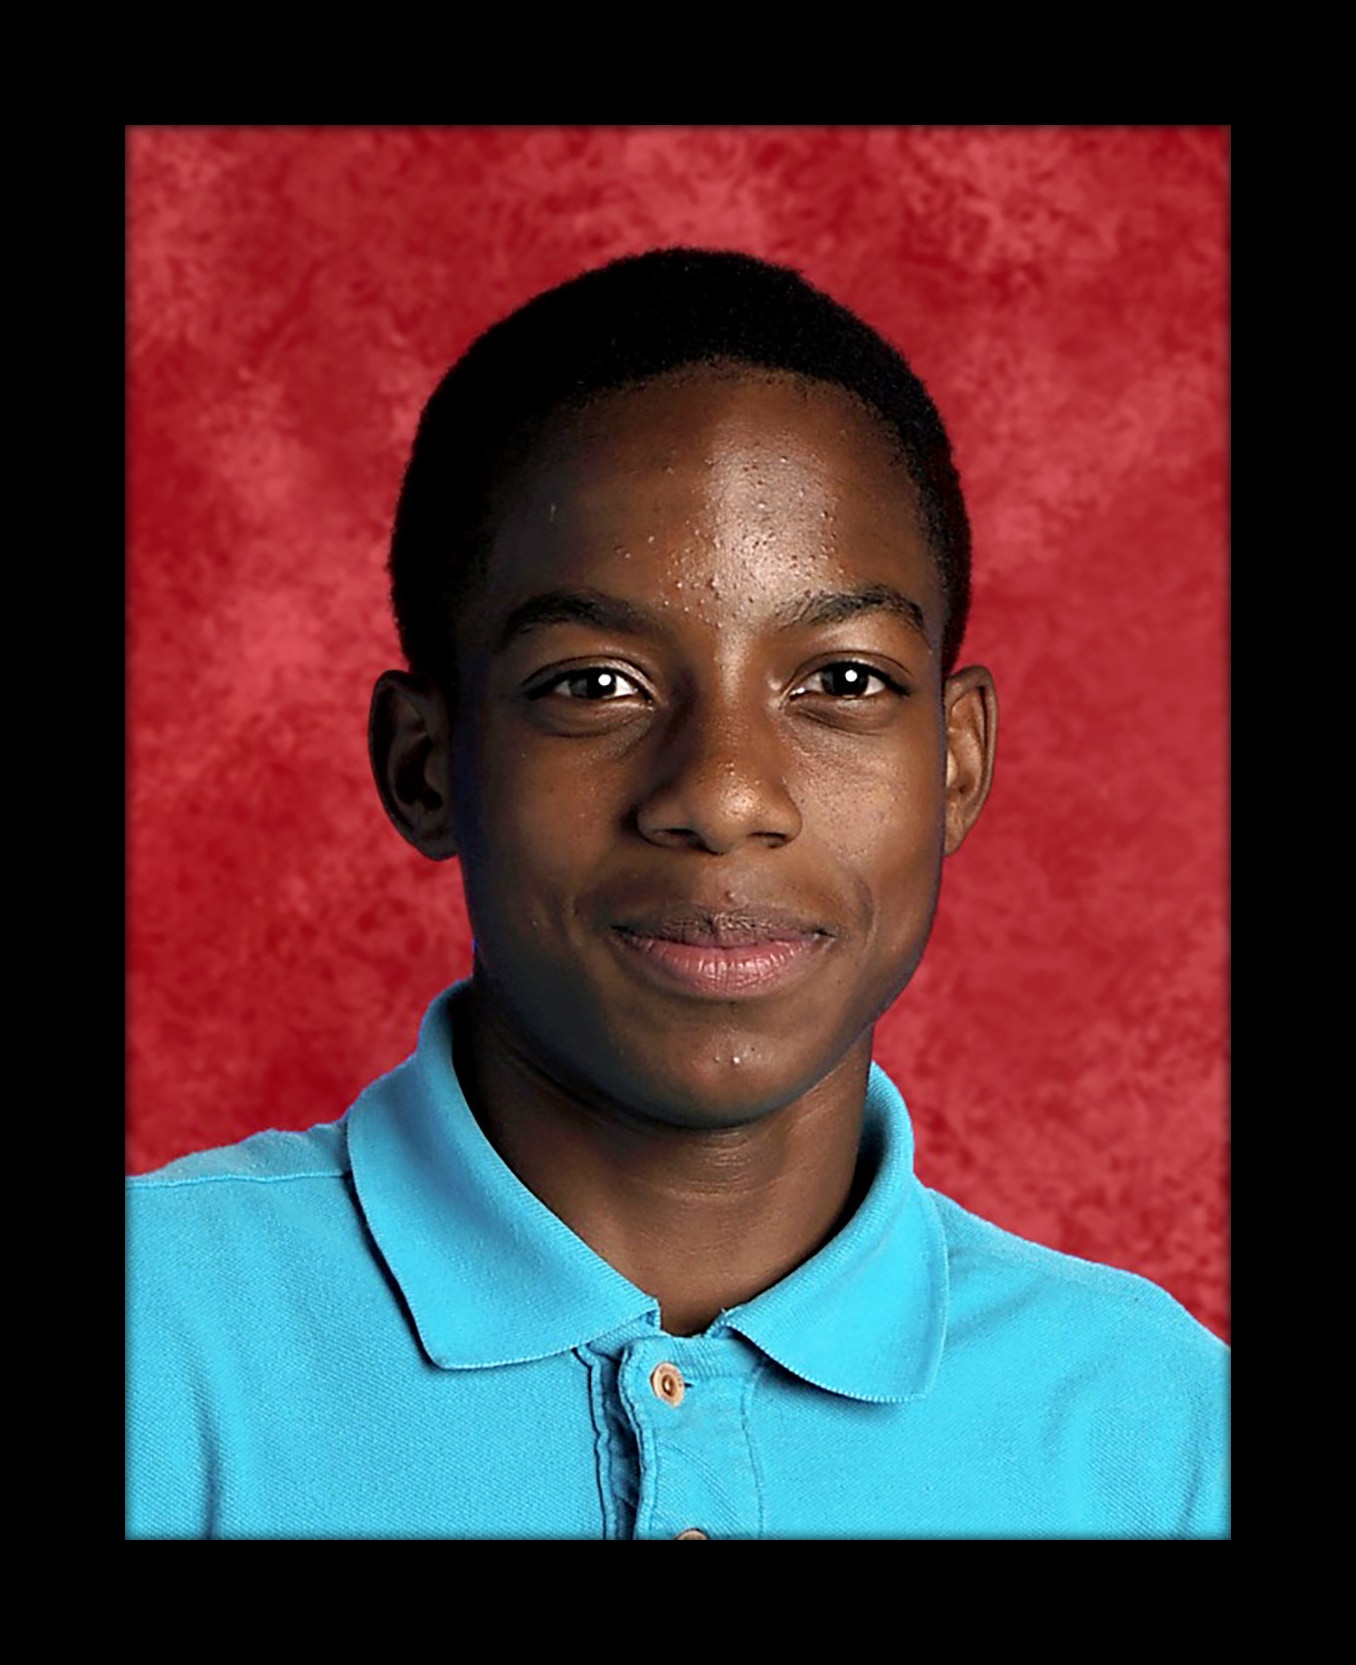 For Black Kids Like Jordan Edwards, Time Is A Fragile Illusion